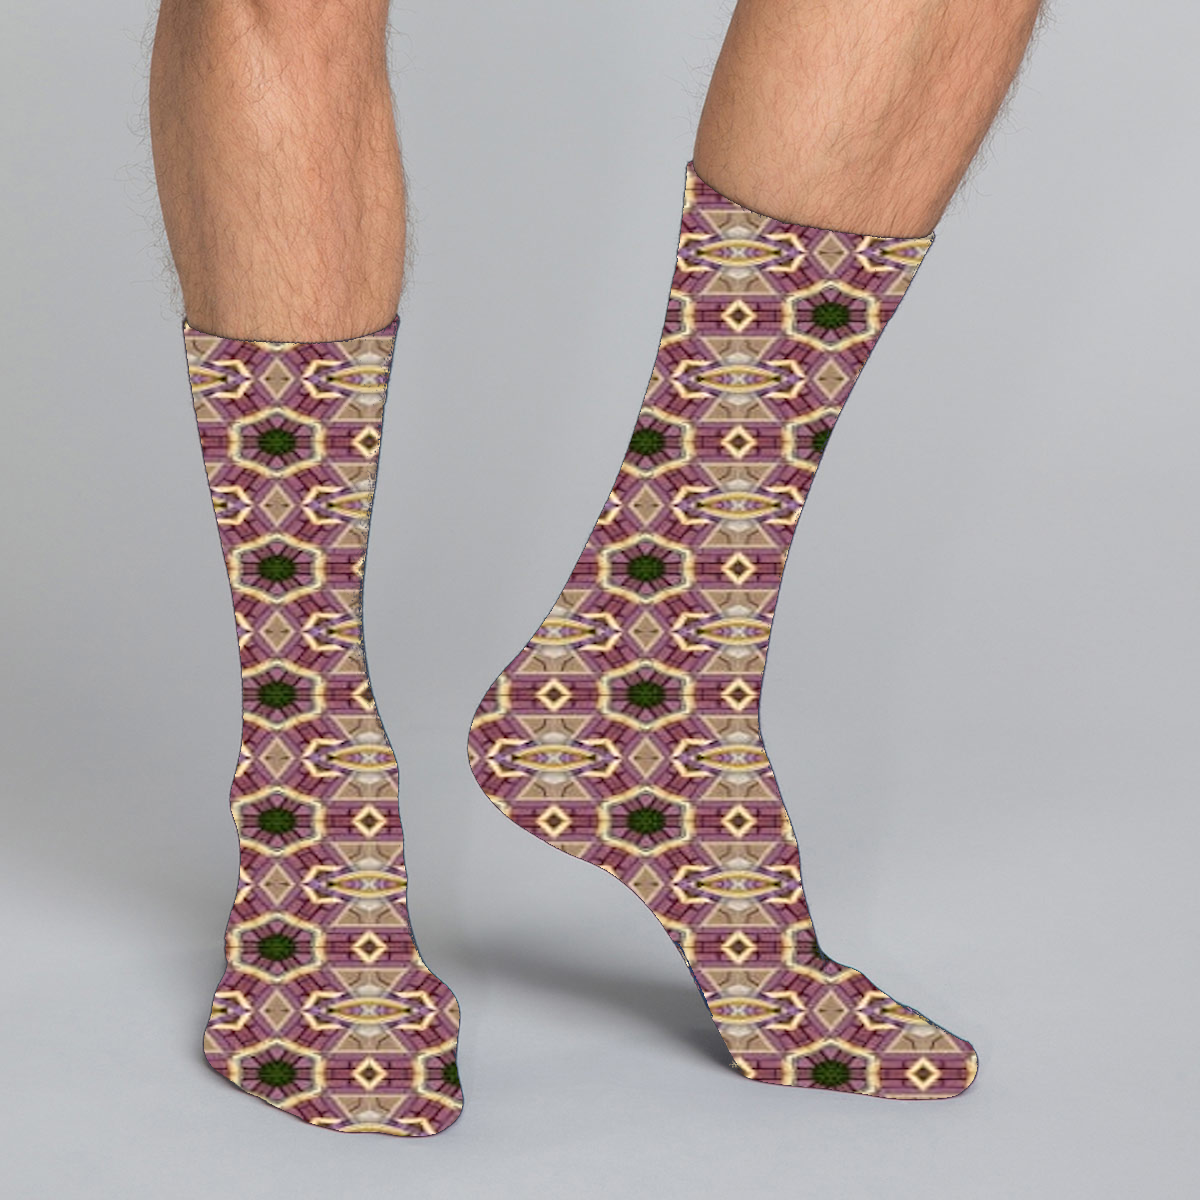 Socks design and sublimation socks designs by Mudassir_khan1